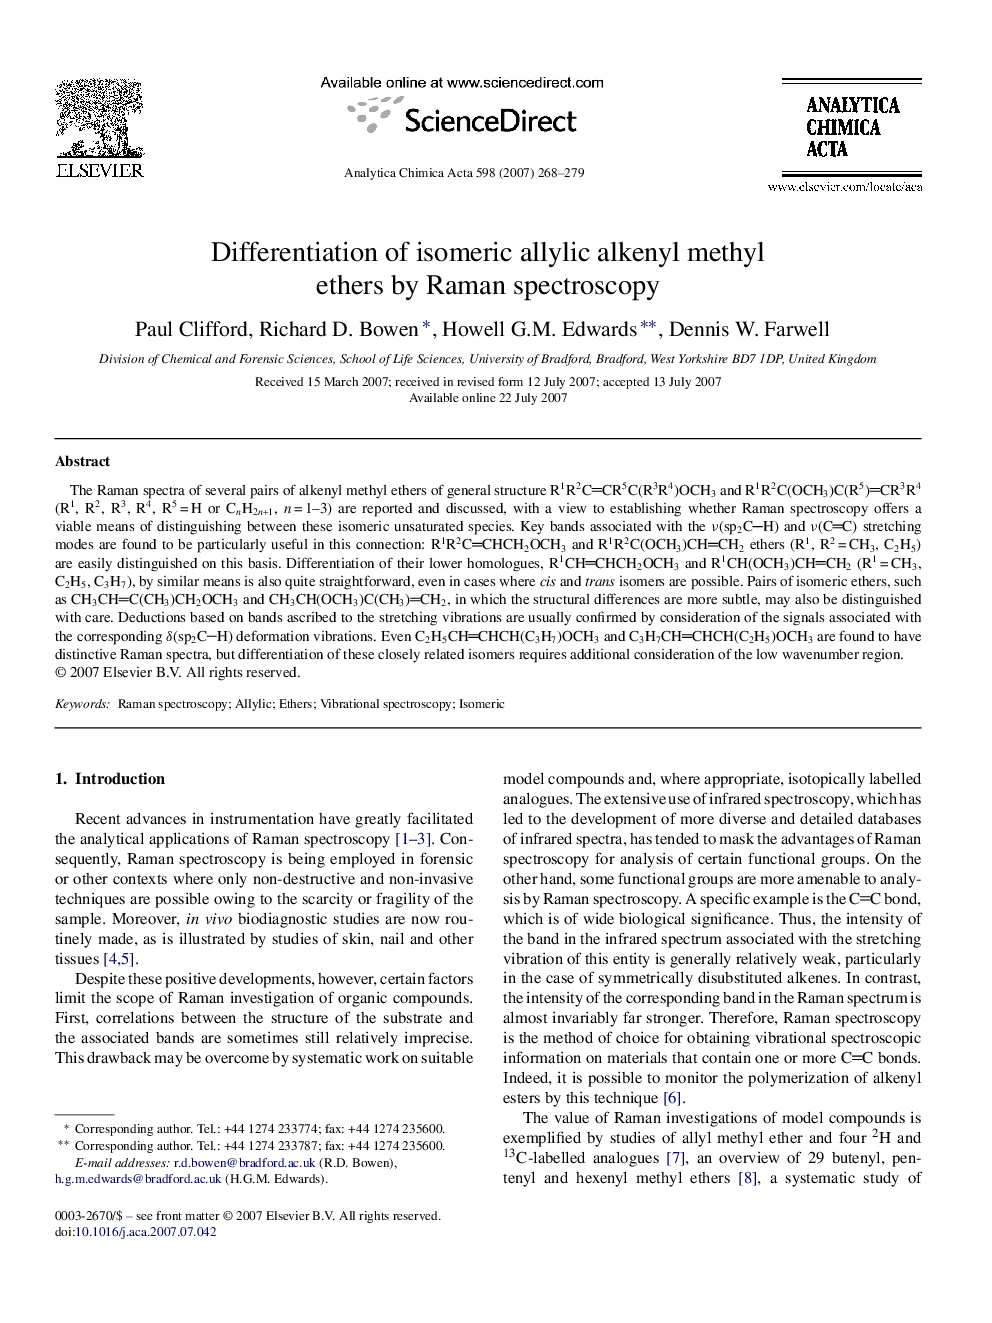 Differentiation of isomeric allylic alkenyl methyl ethers by Raman spectroscopy